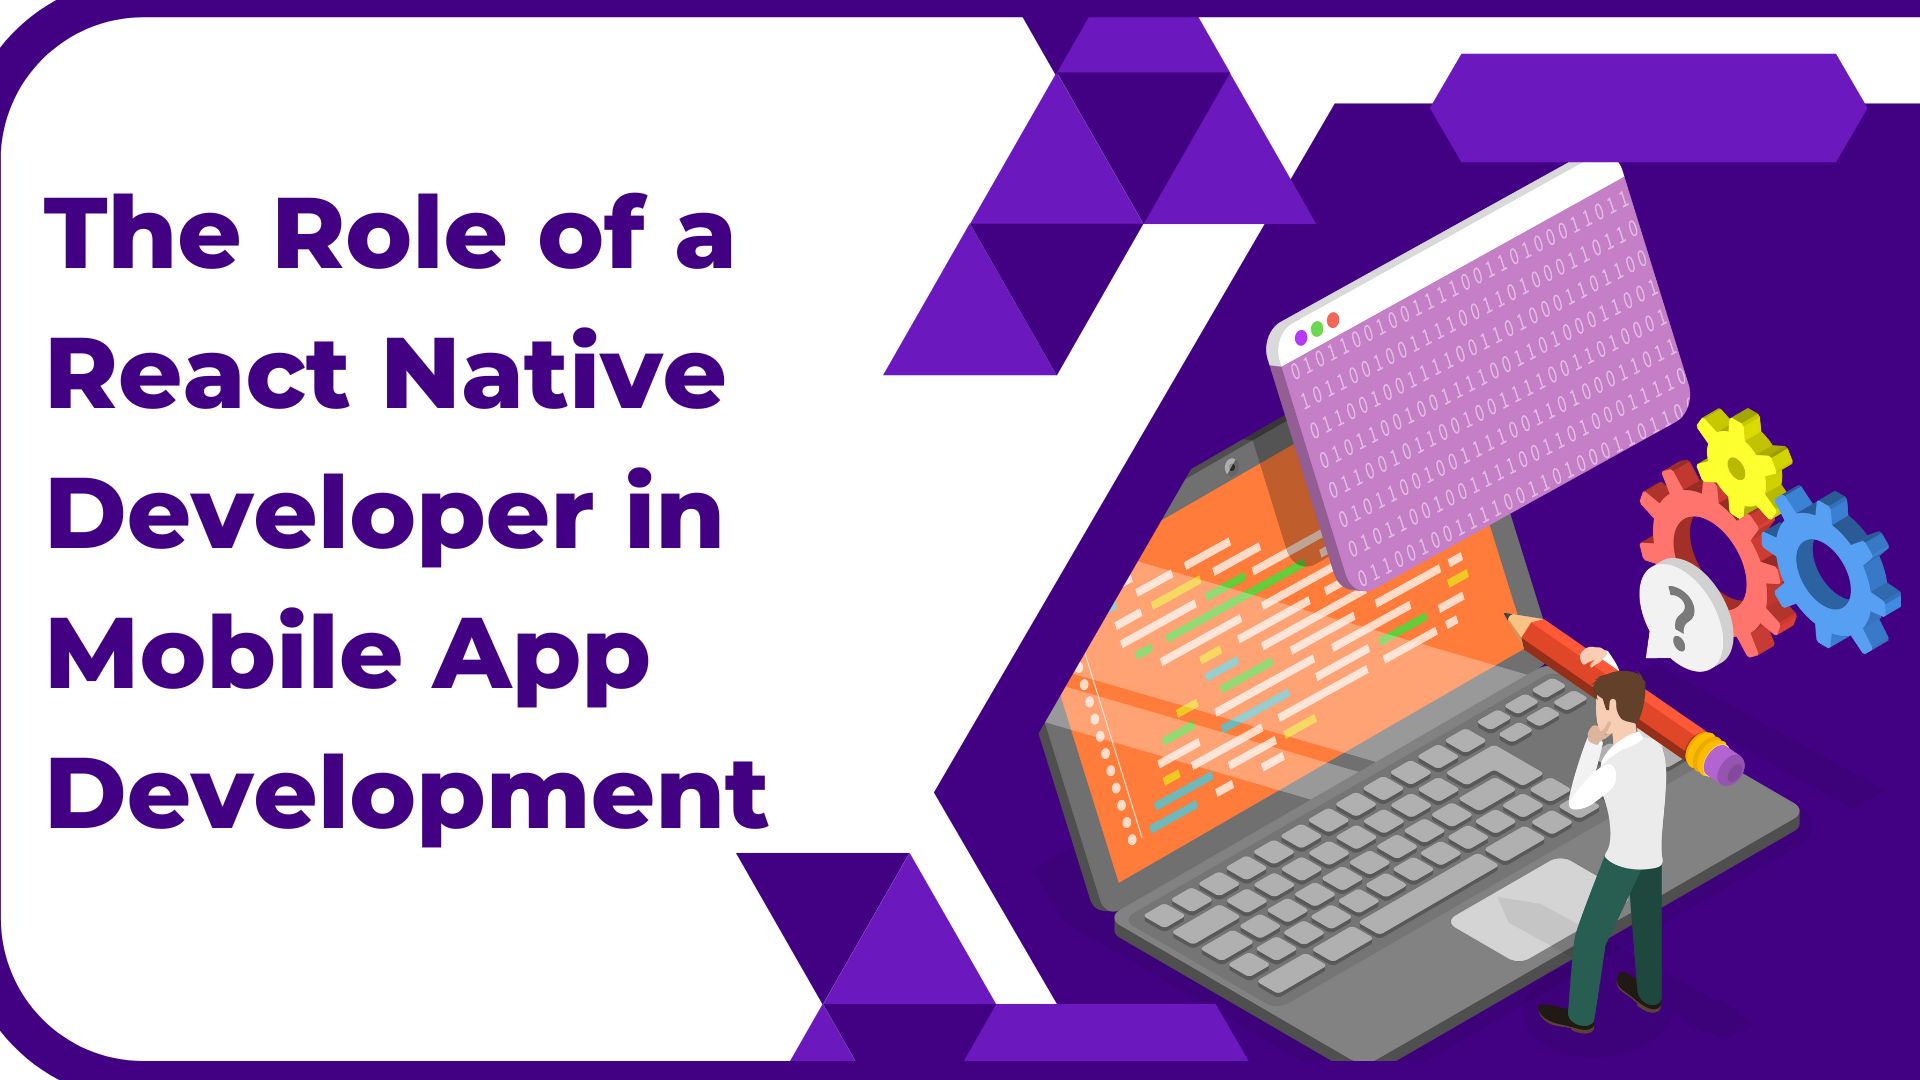 The Role of a React Native Developer in Mobile App Development